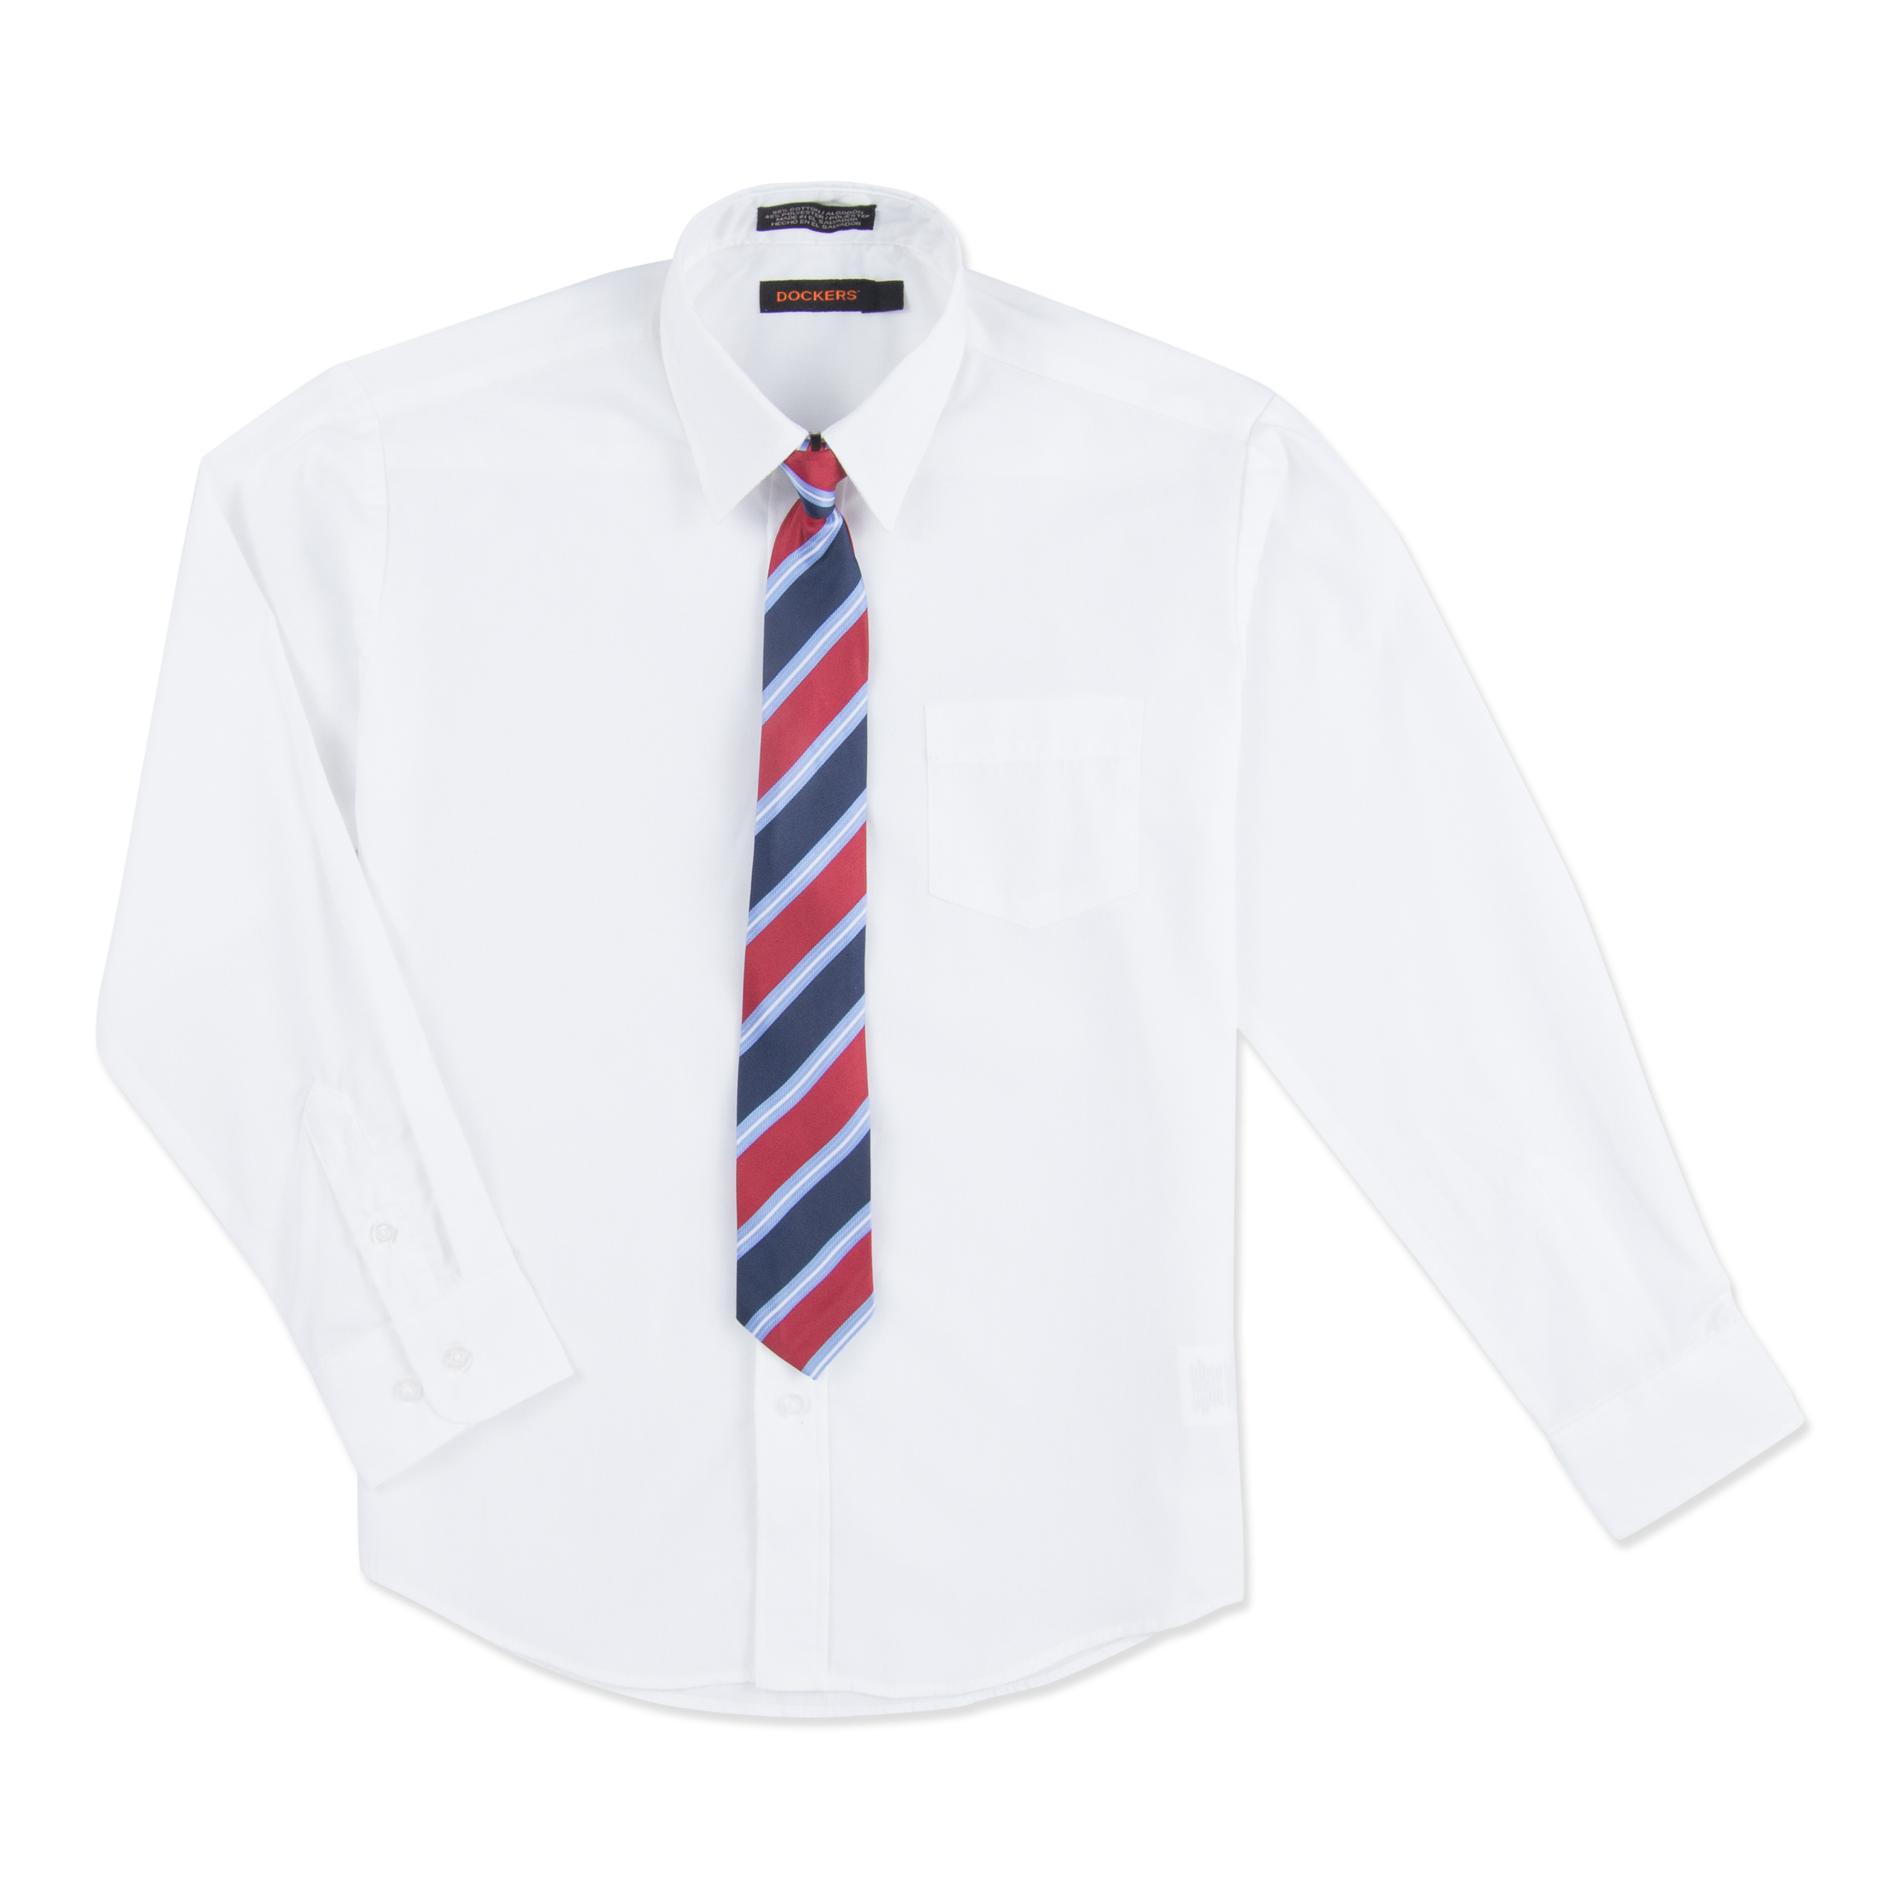 Dockers Boy's Dress Shirt & Necktie - Striped